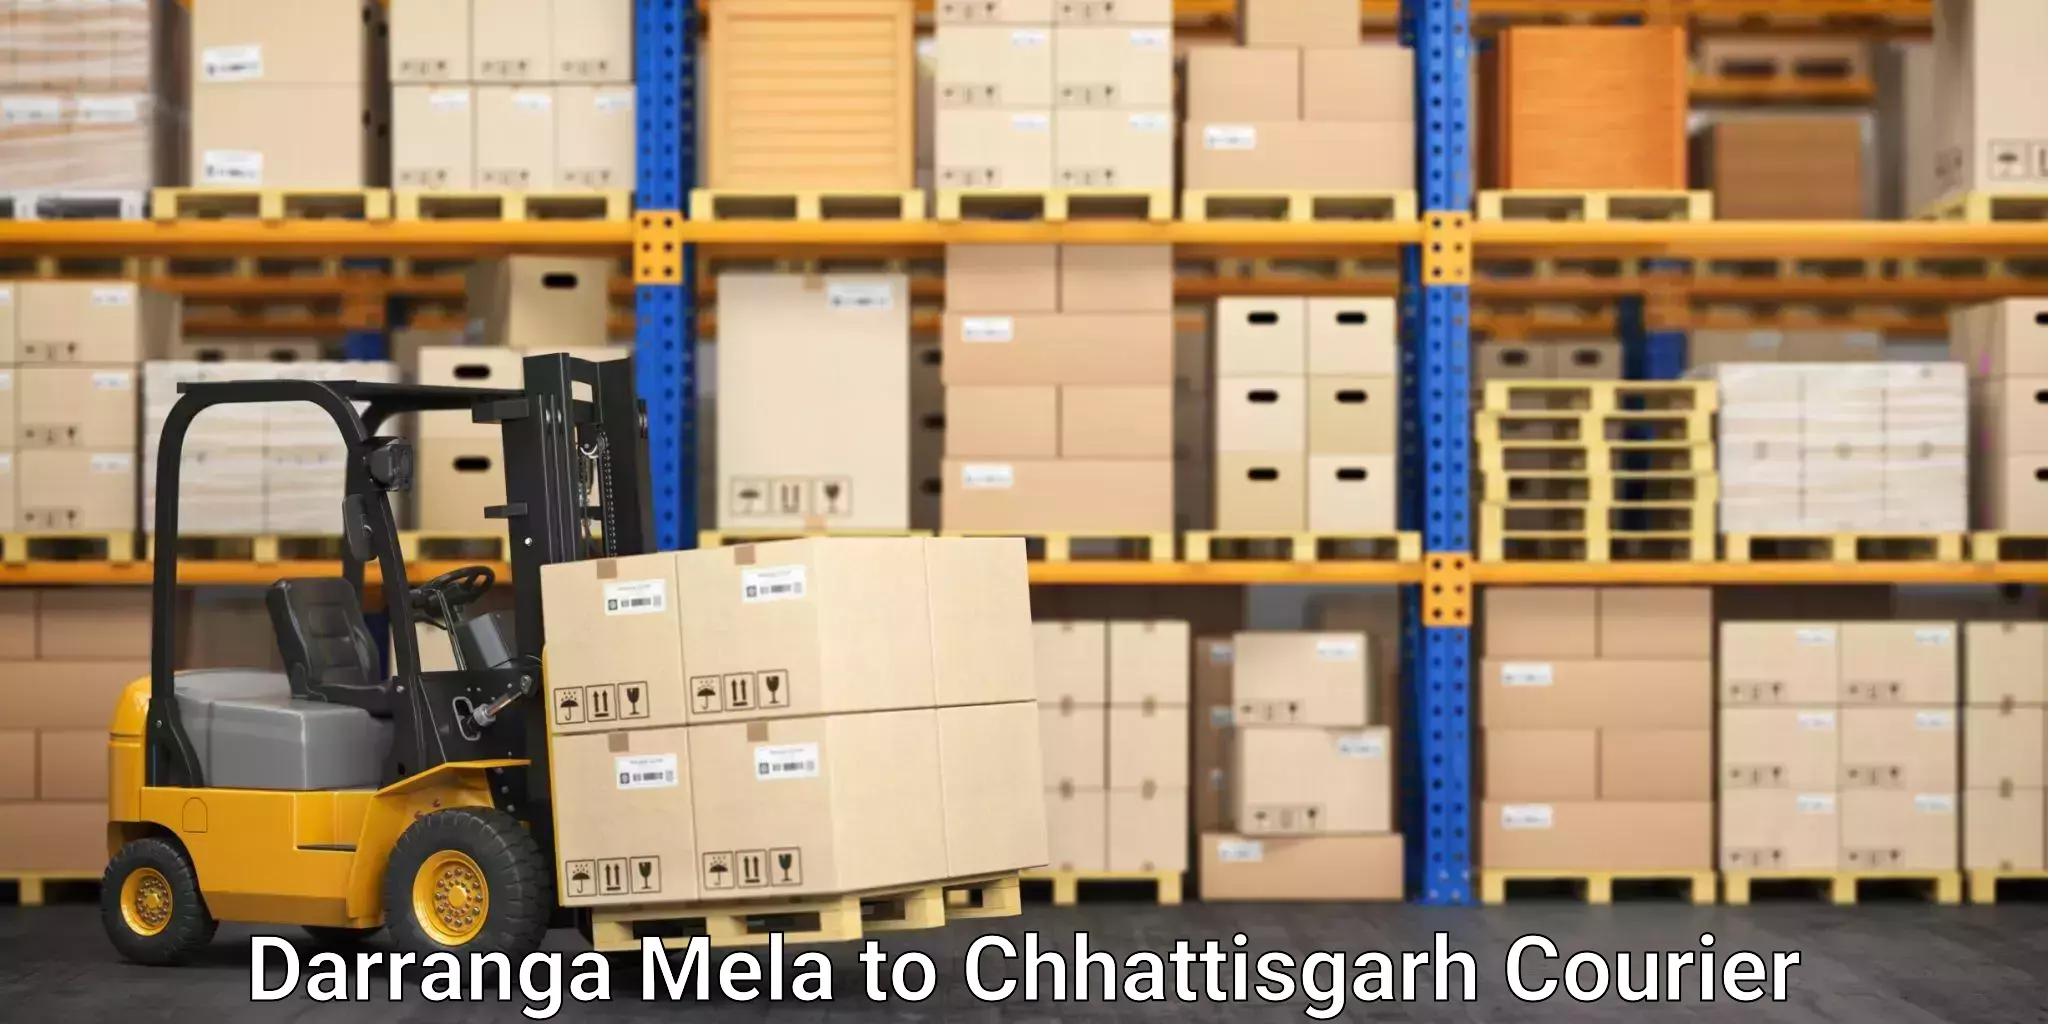 Secure packaging Darranga Mela to Dongargarh